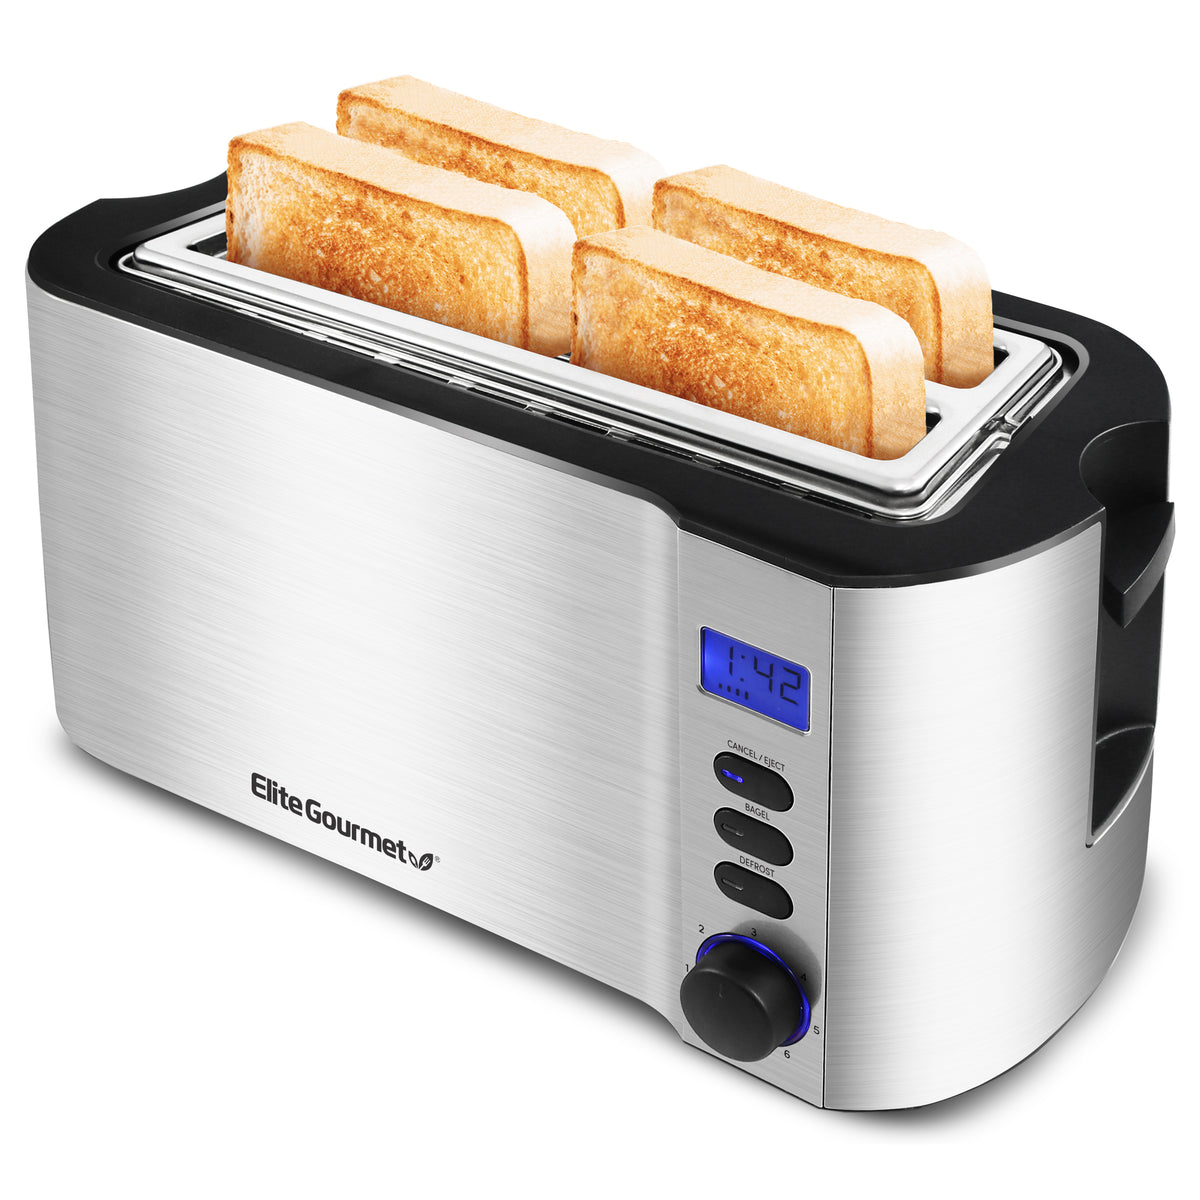 Narrow 4-Slice Toaster - Best Buy